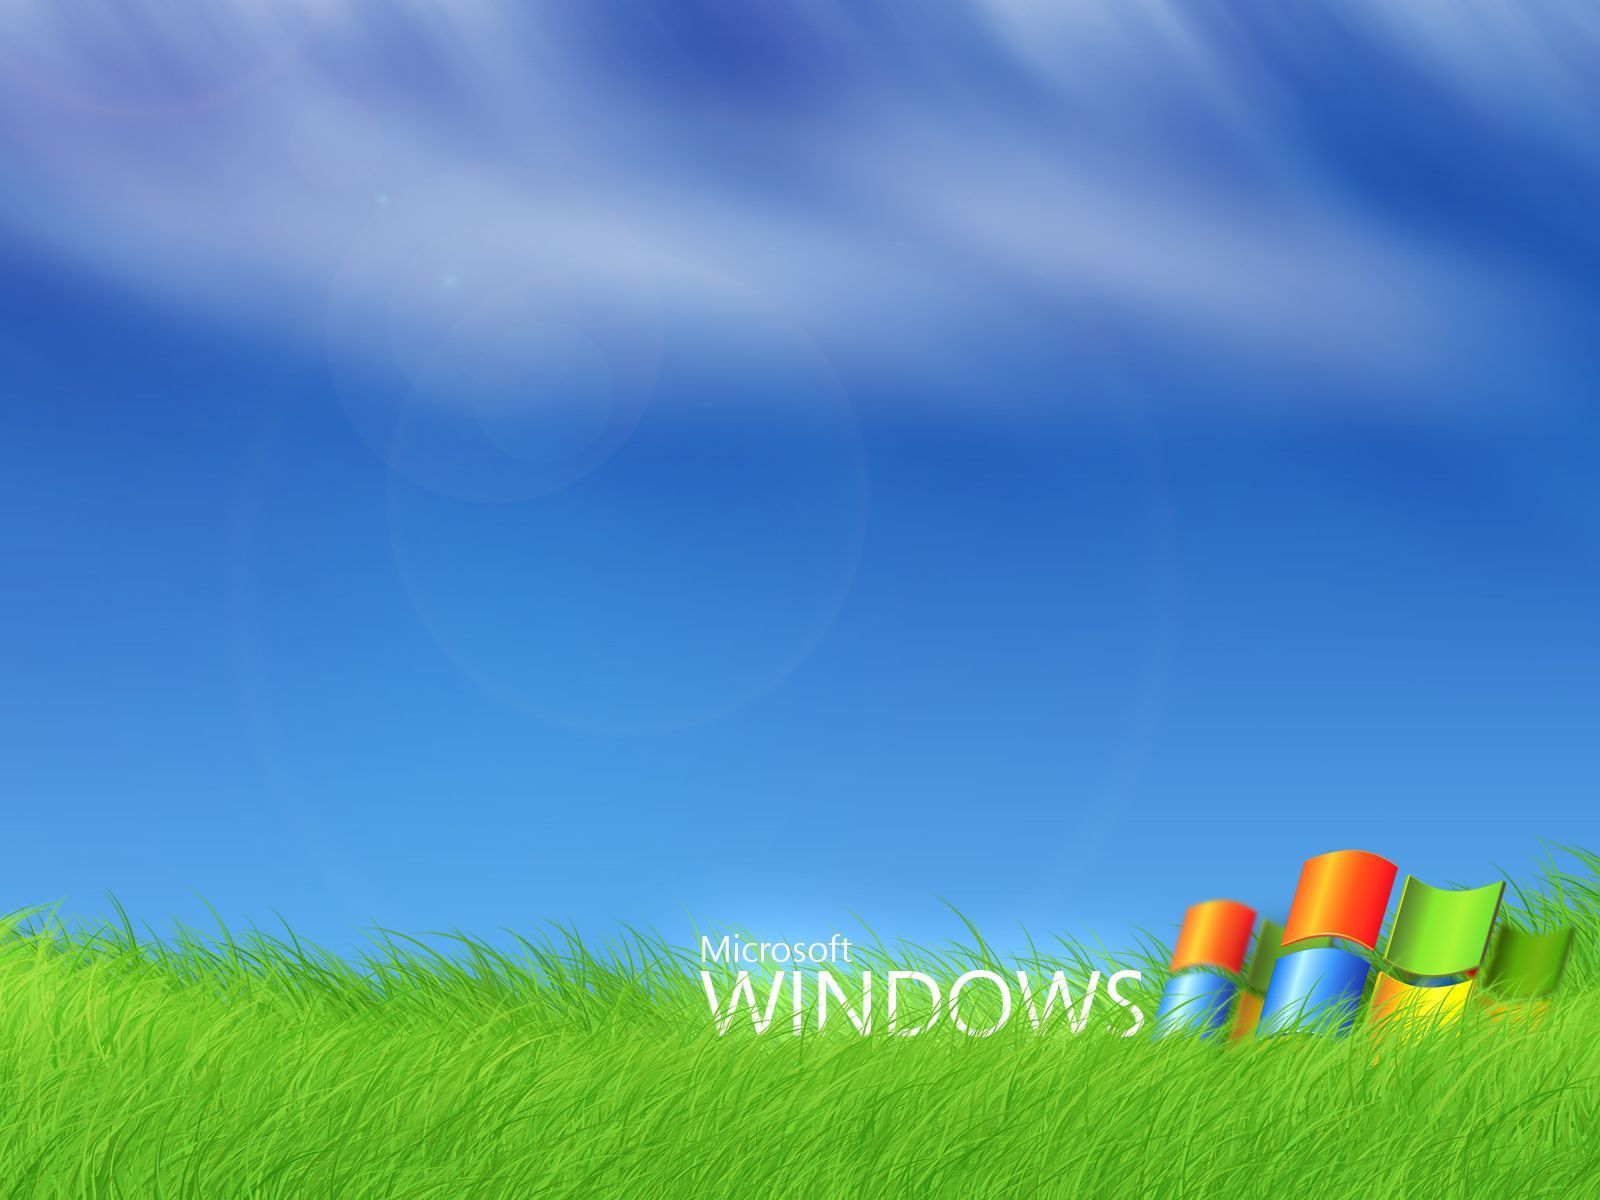 Microsoft Windows Wallpapers | HD Wallpapers